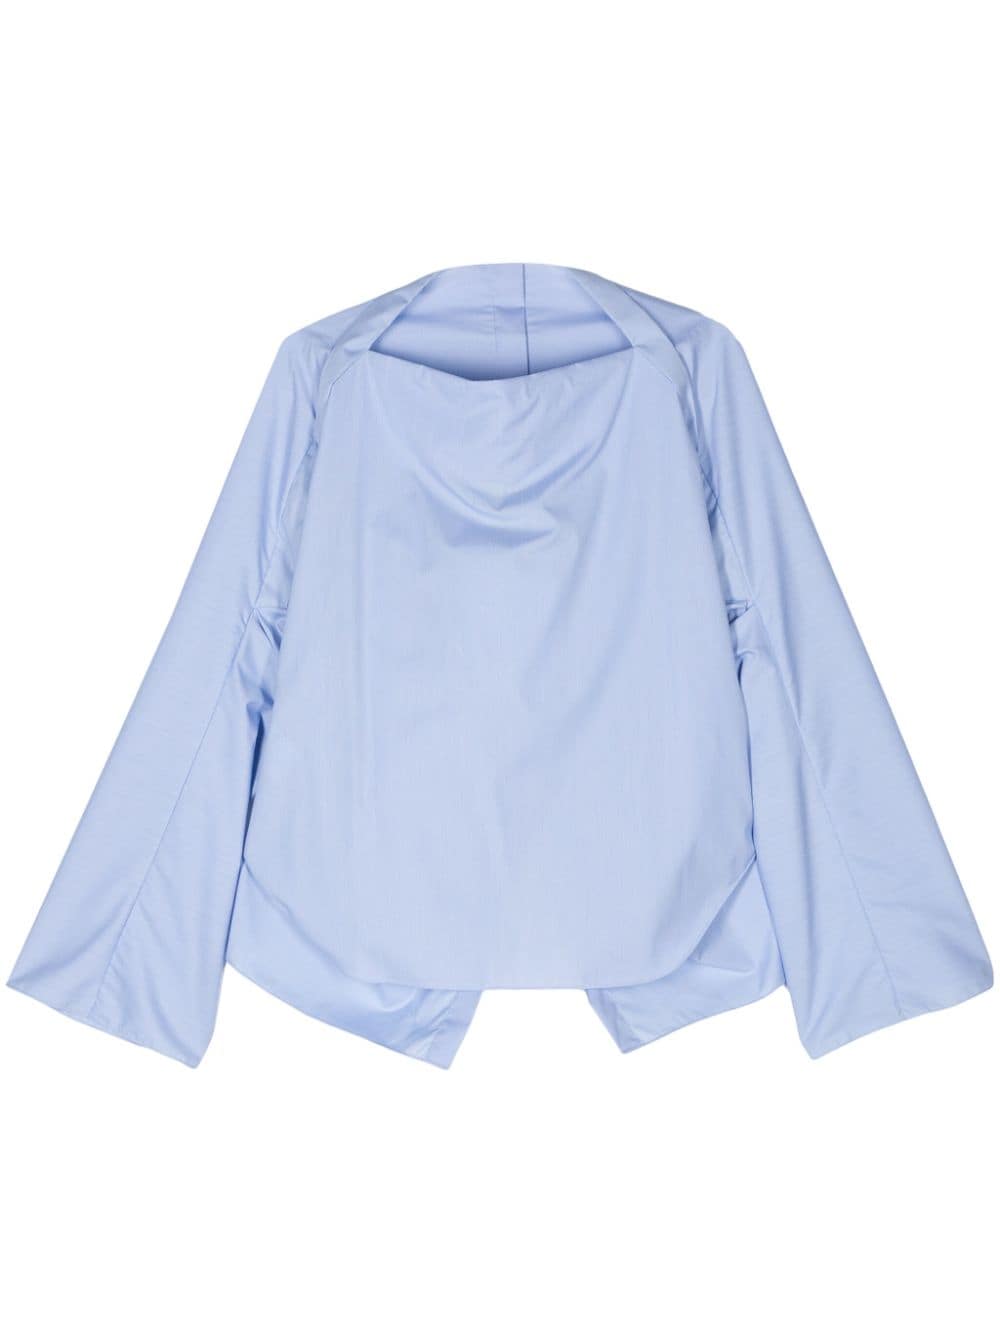 Litkovskaya Wisdom asymmetric blouse - BLUE